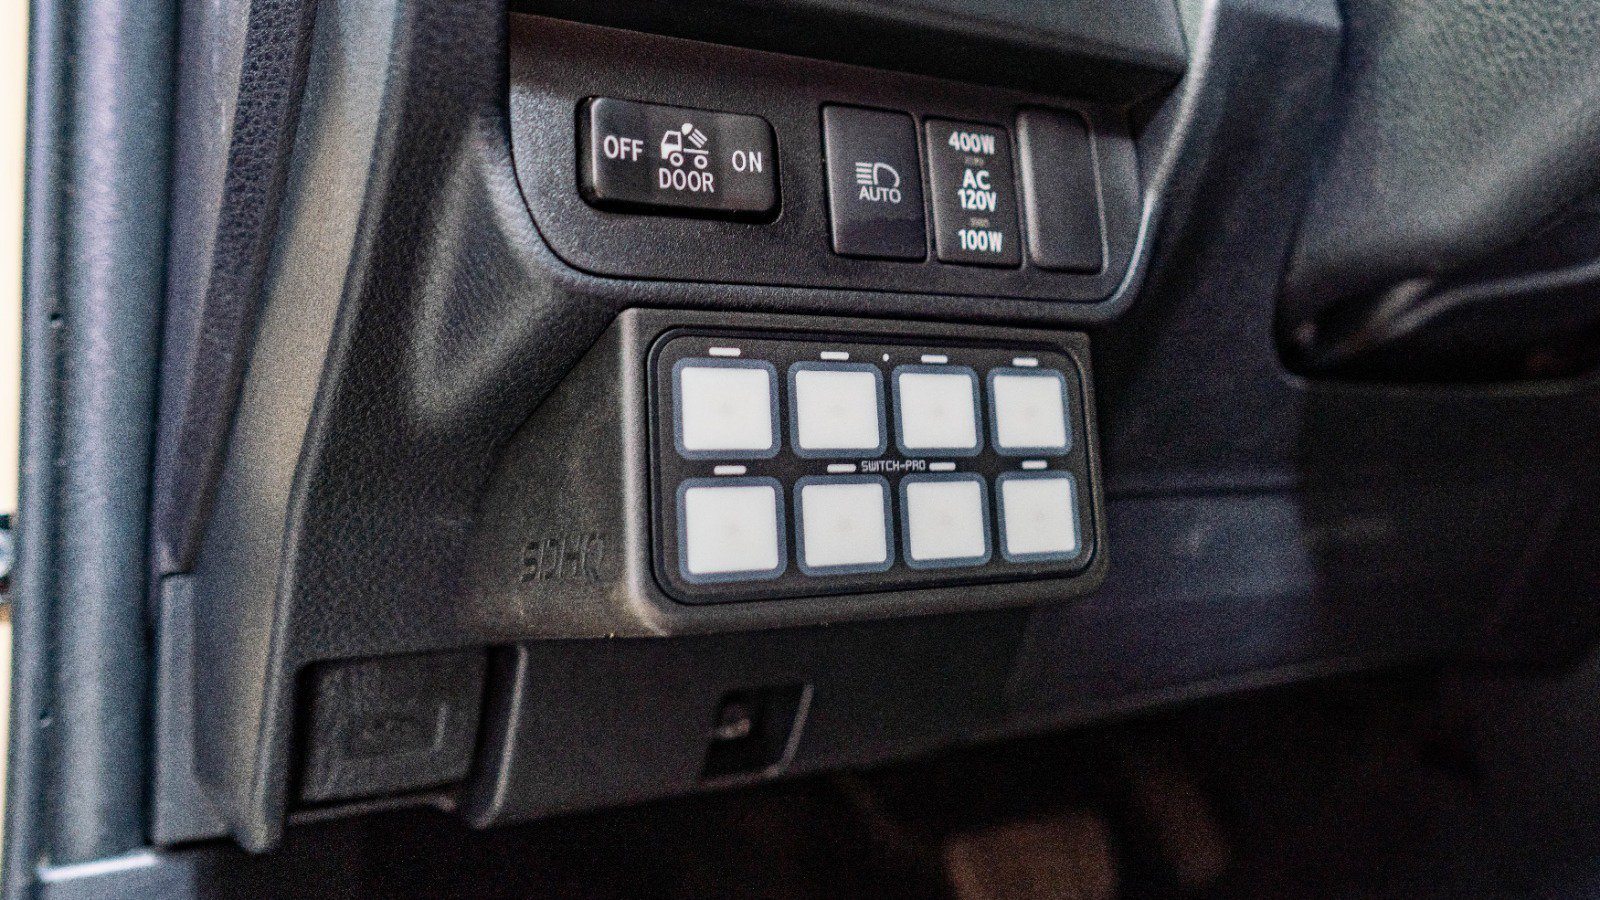 '16-23 Toyota Tacoma SDHQ Built Switch Pros SP-9100 Keypad Mount Lighting SDHQ Off Road display